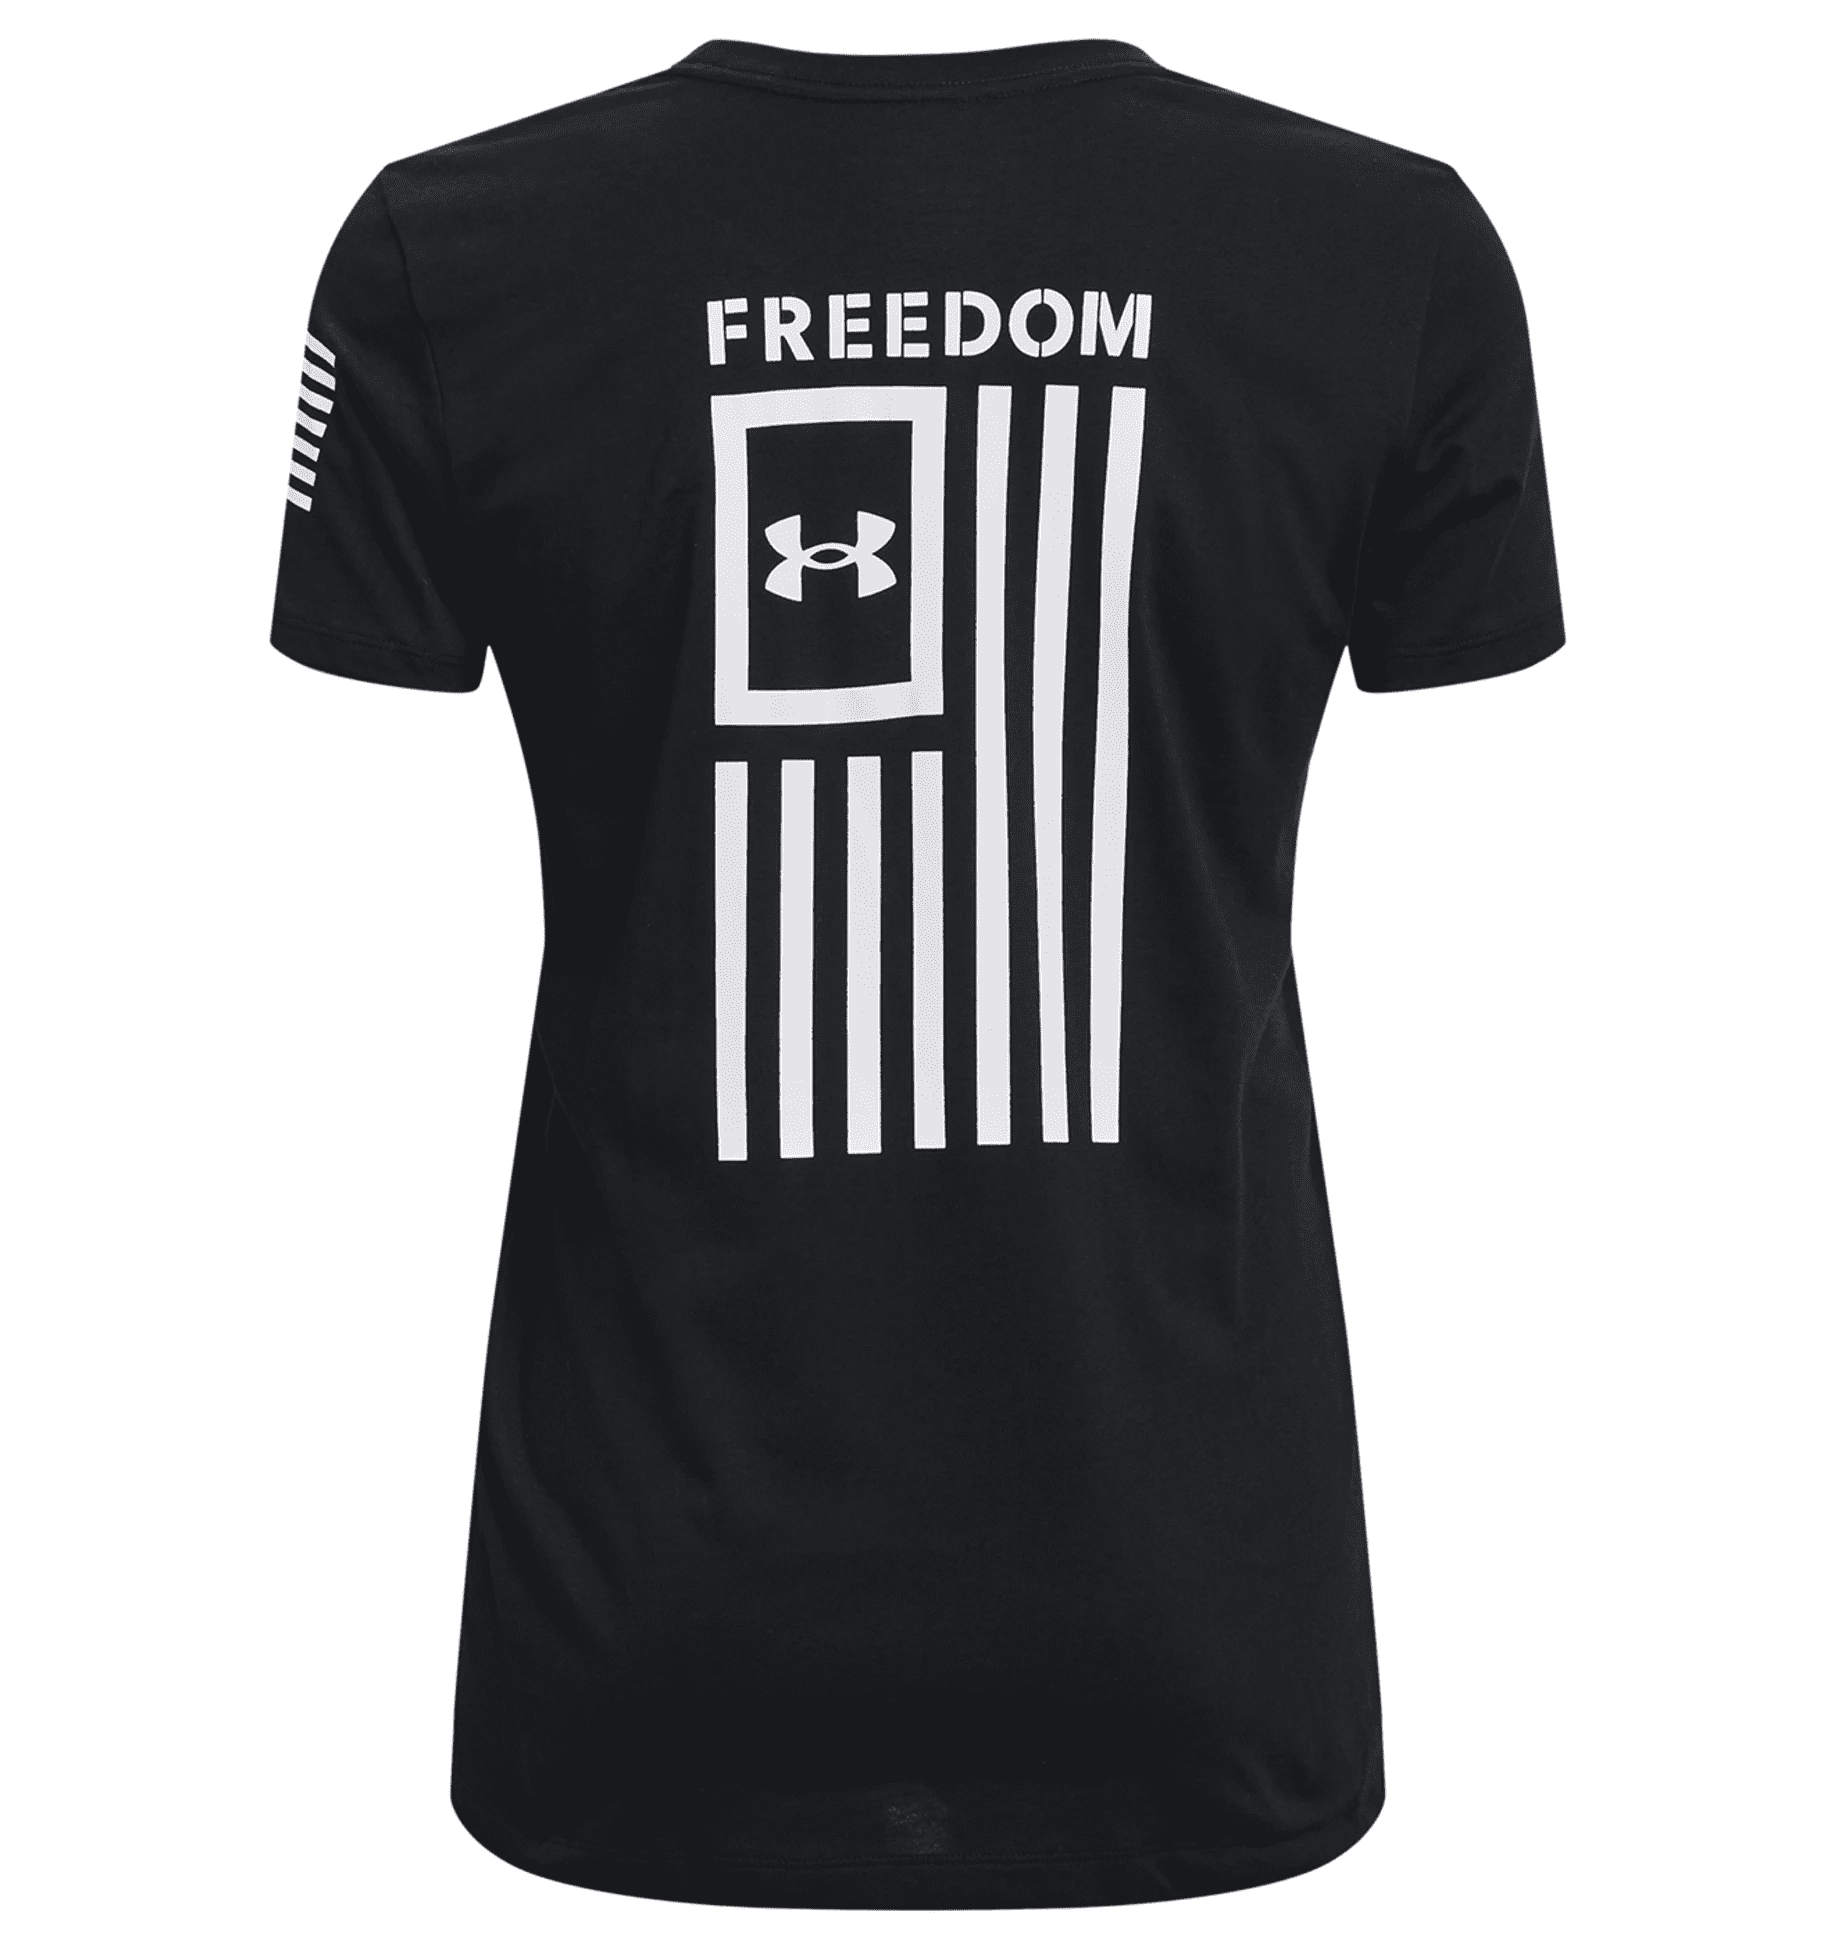 Under Armour Women's UA Freedom Flag T-Shirt 1370814 - Black, 2XL